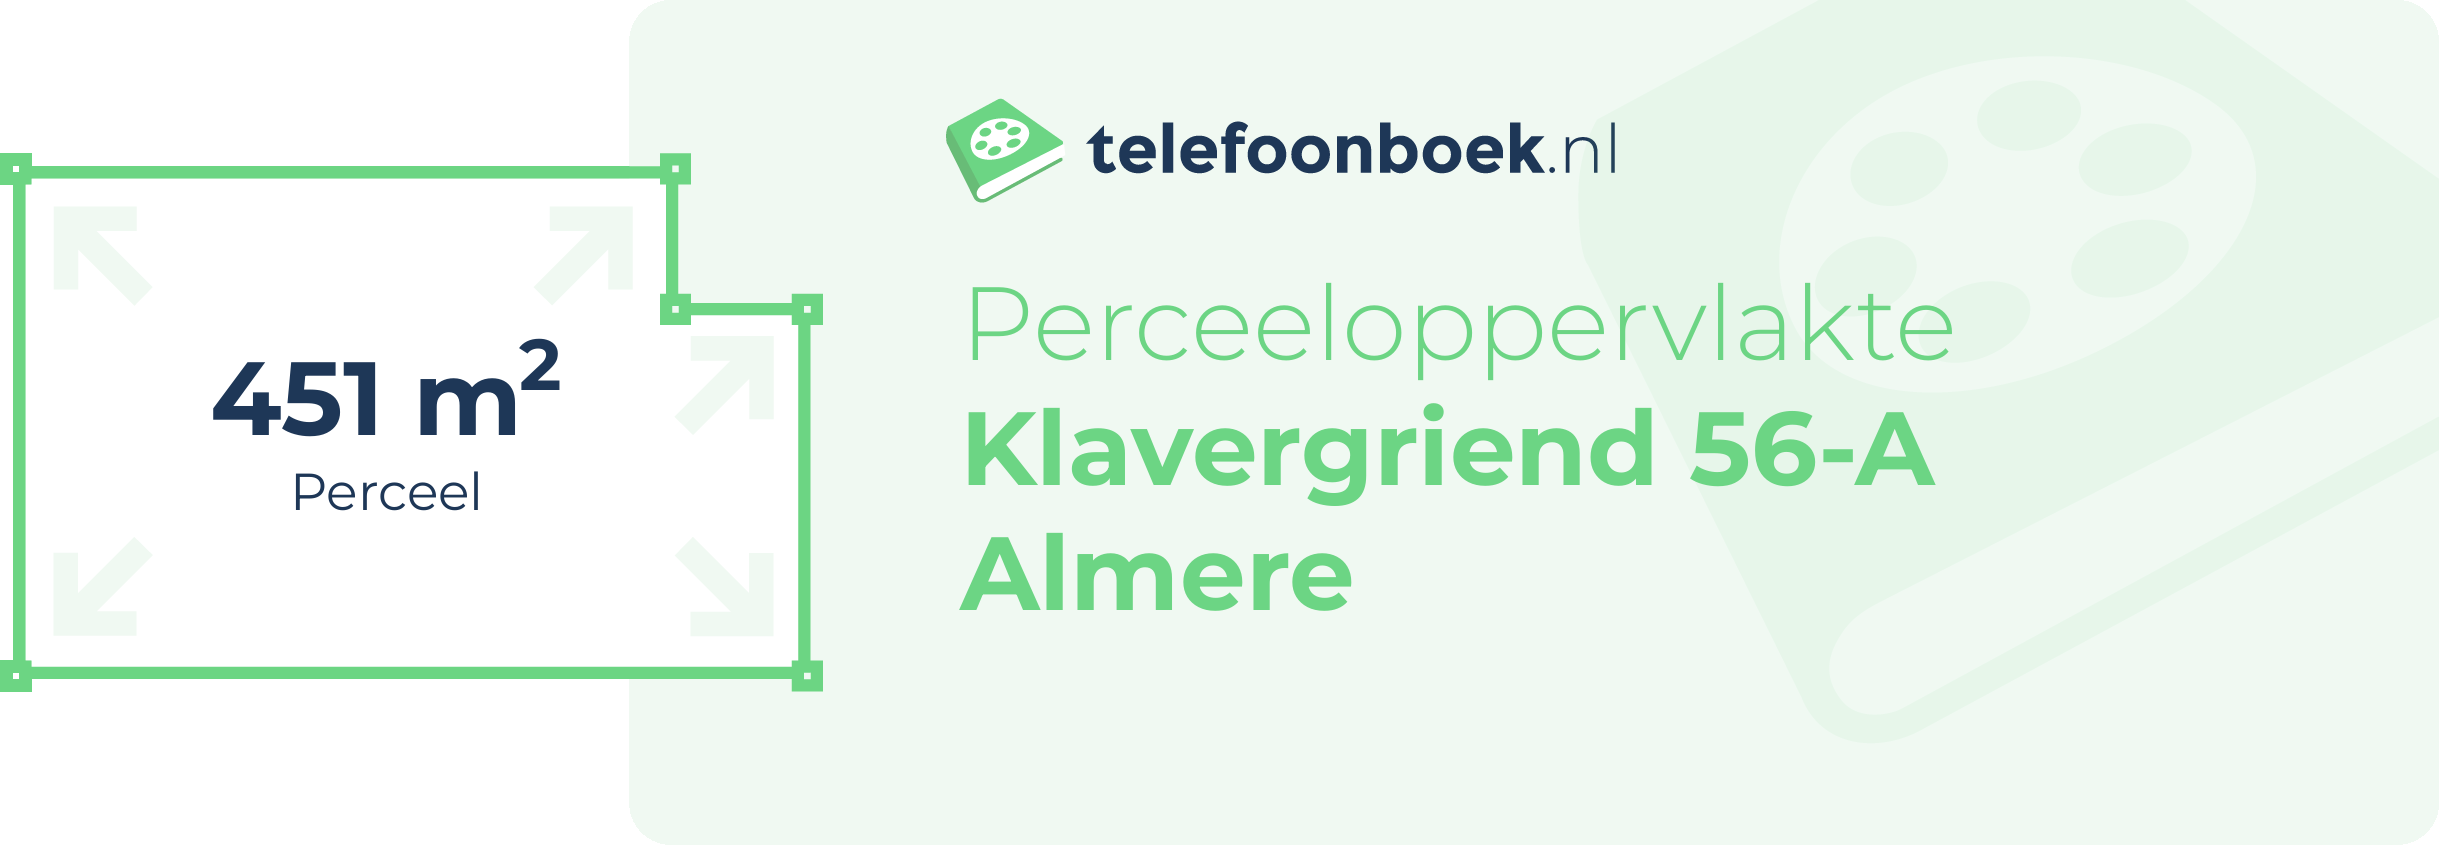 Perceeloppervlakte Klavergriend 56-A Almere